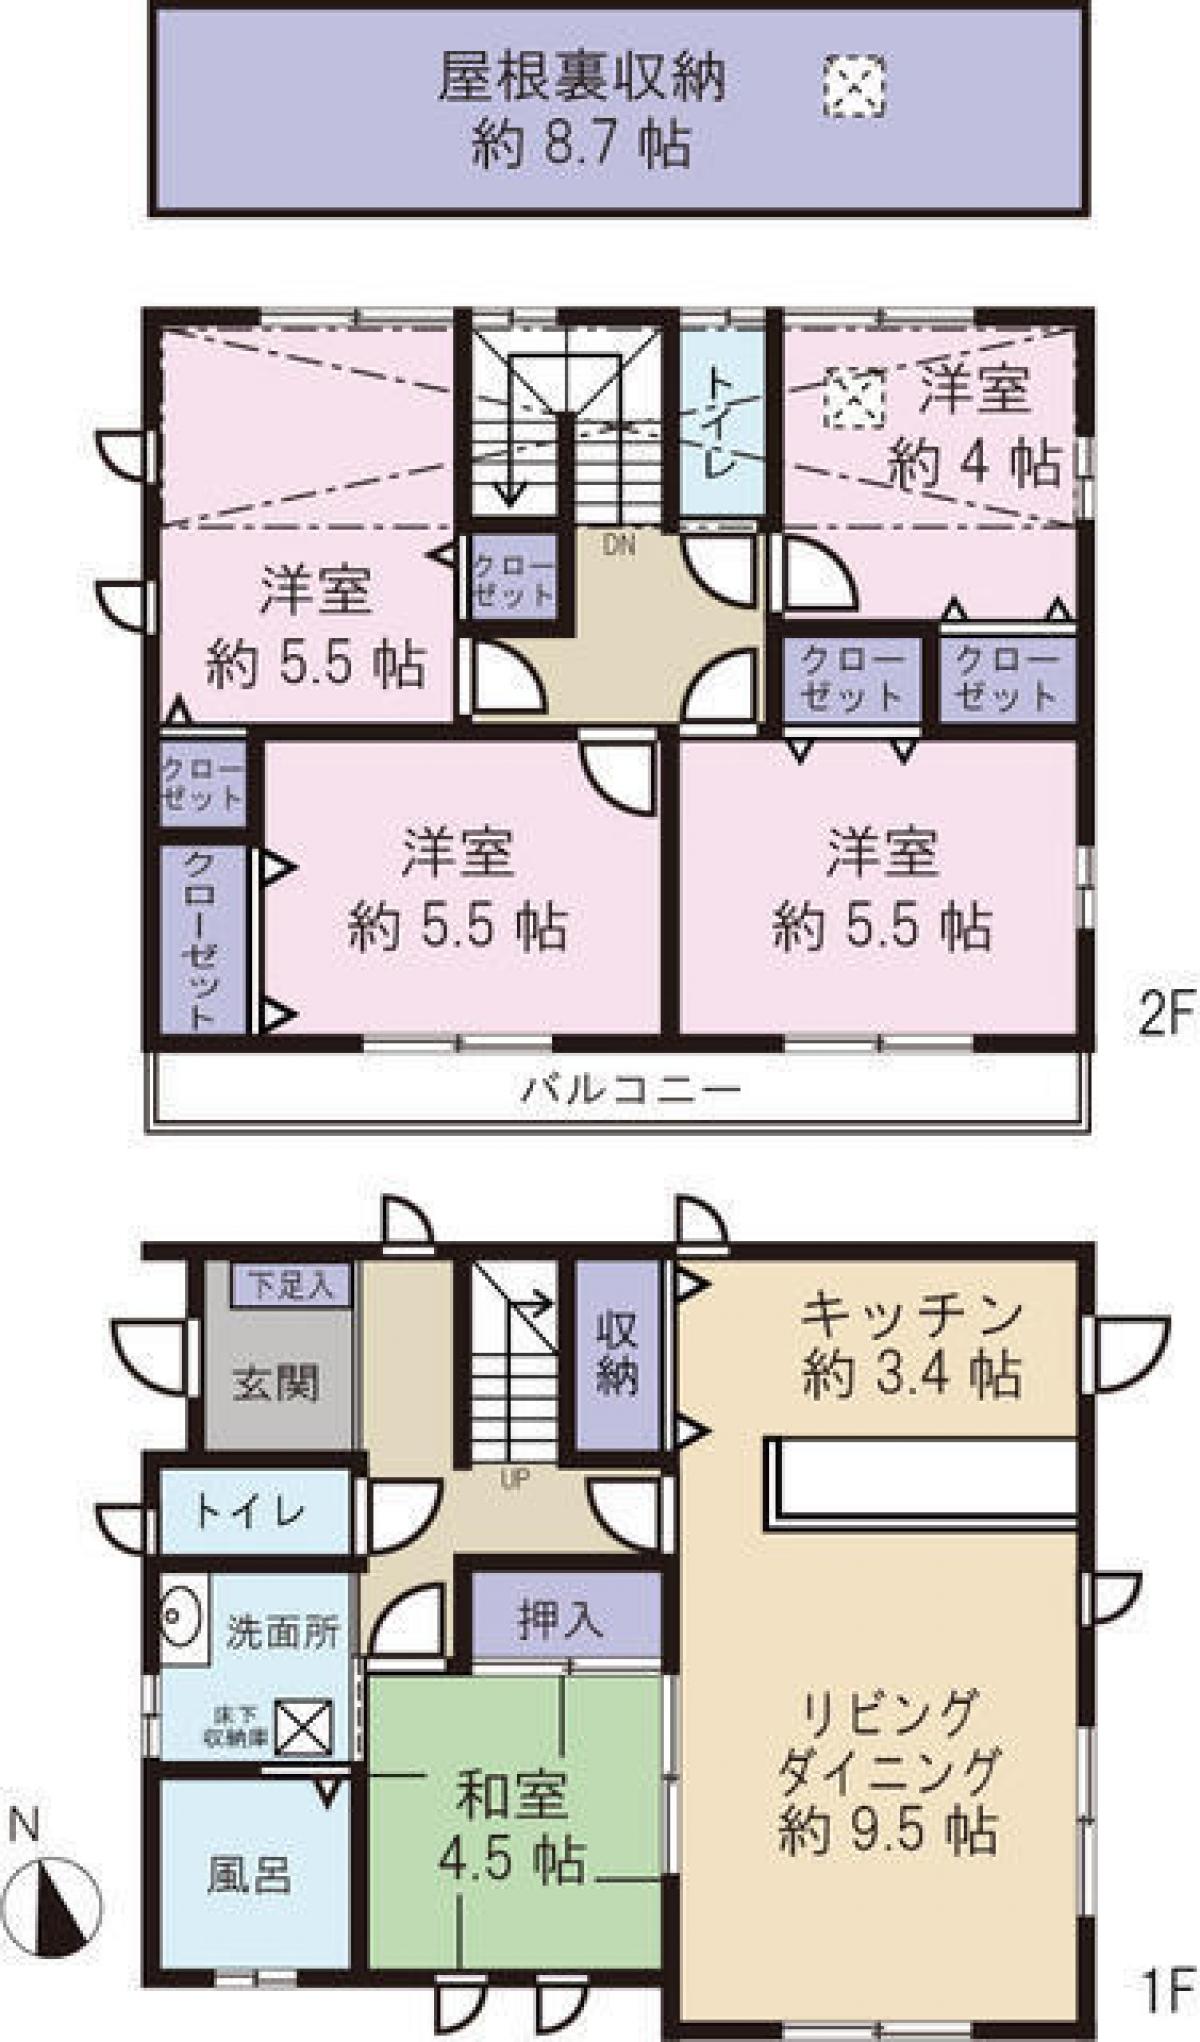 Picture of Home For Sale in Gifu Shi, Gifu, Japan